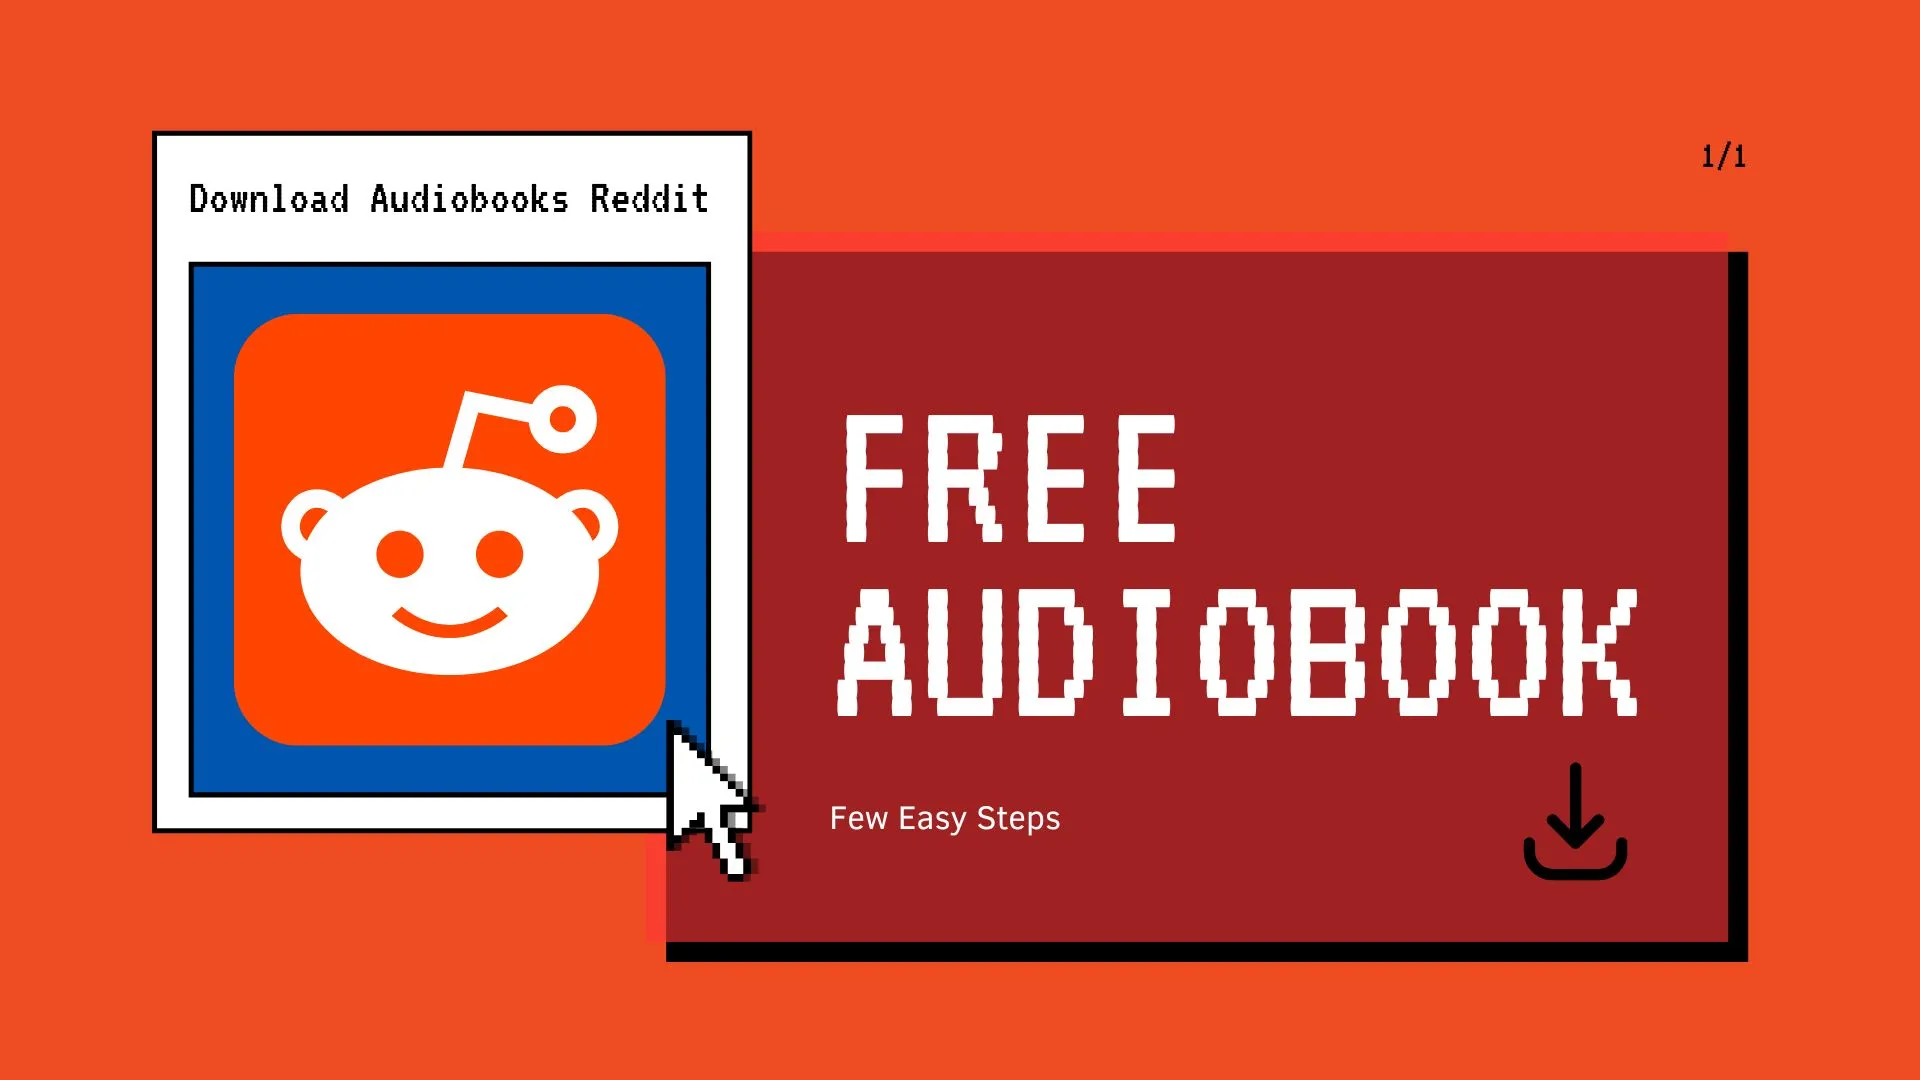 download free autdiobooks reddit